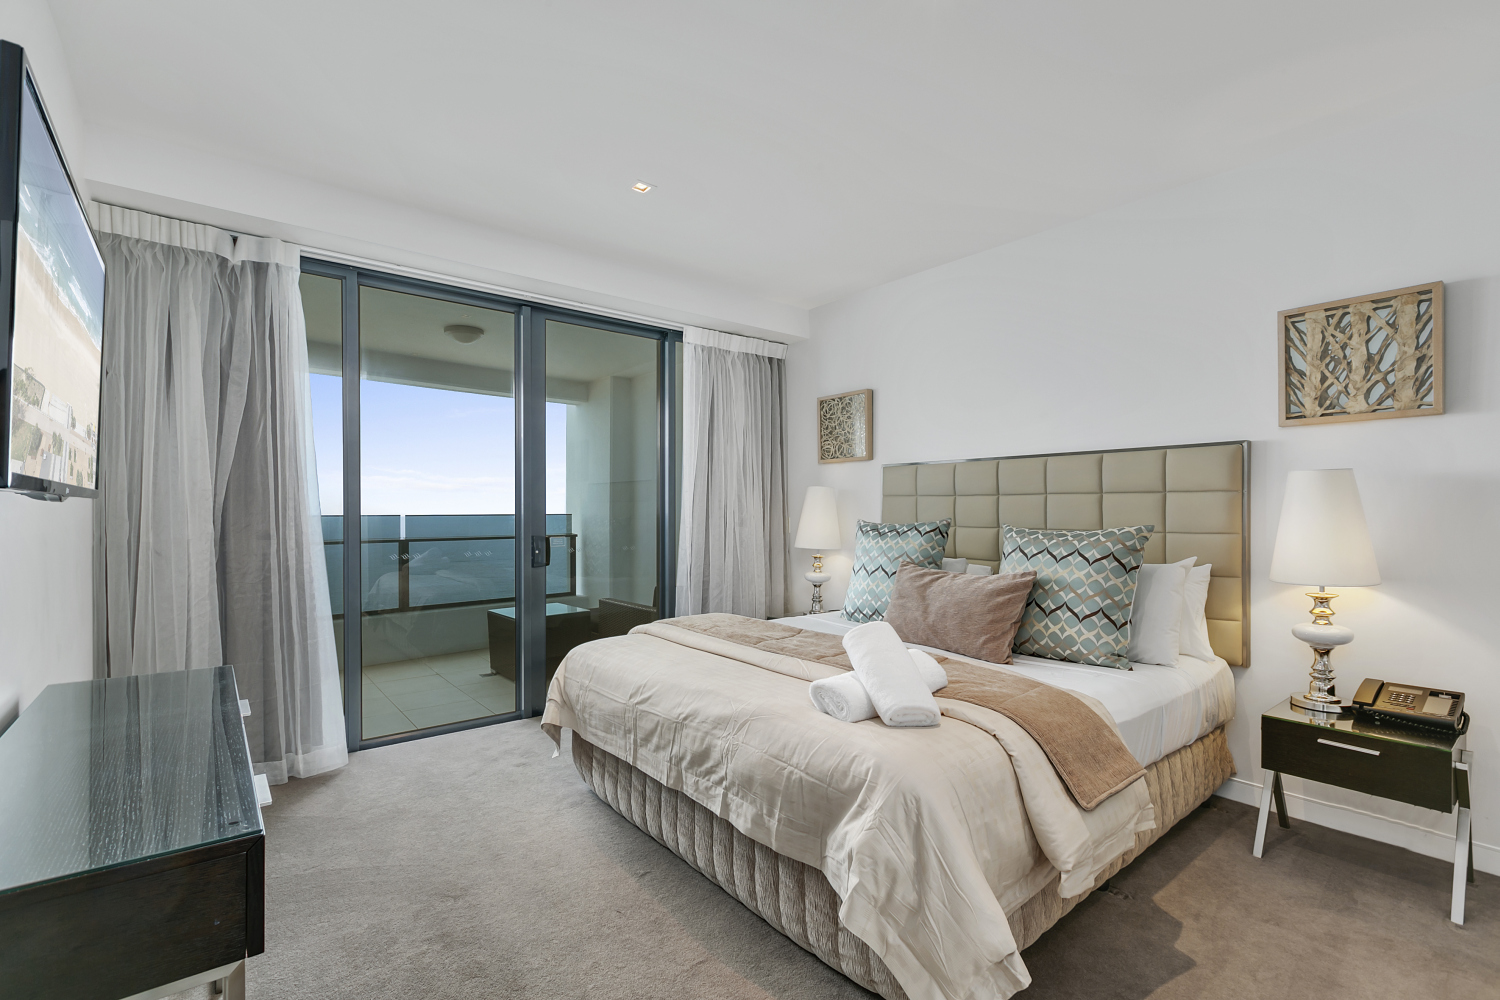 Master Bedroom with ocean views